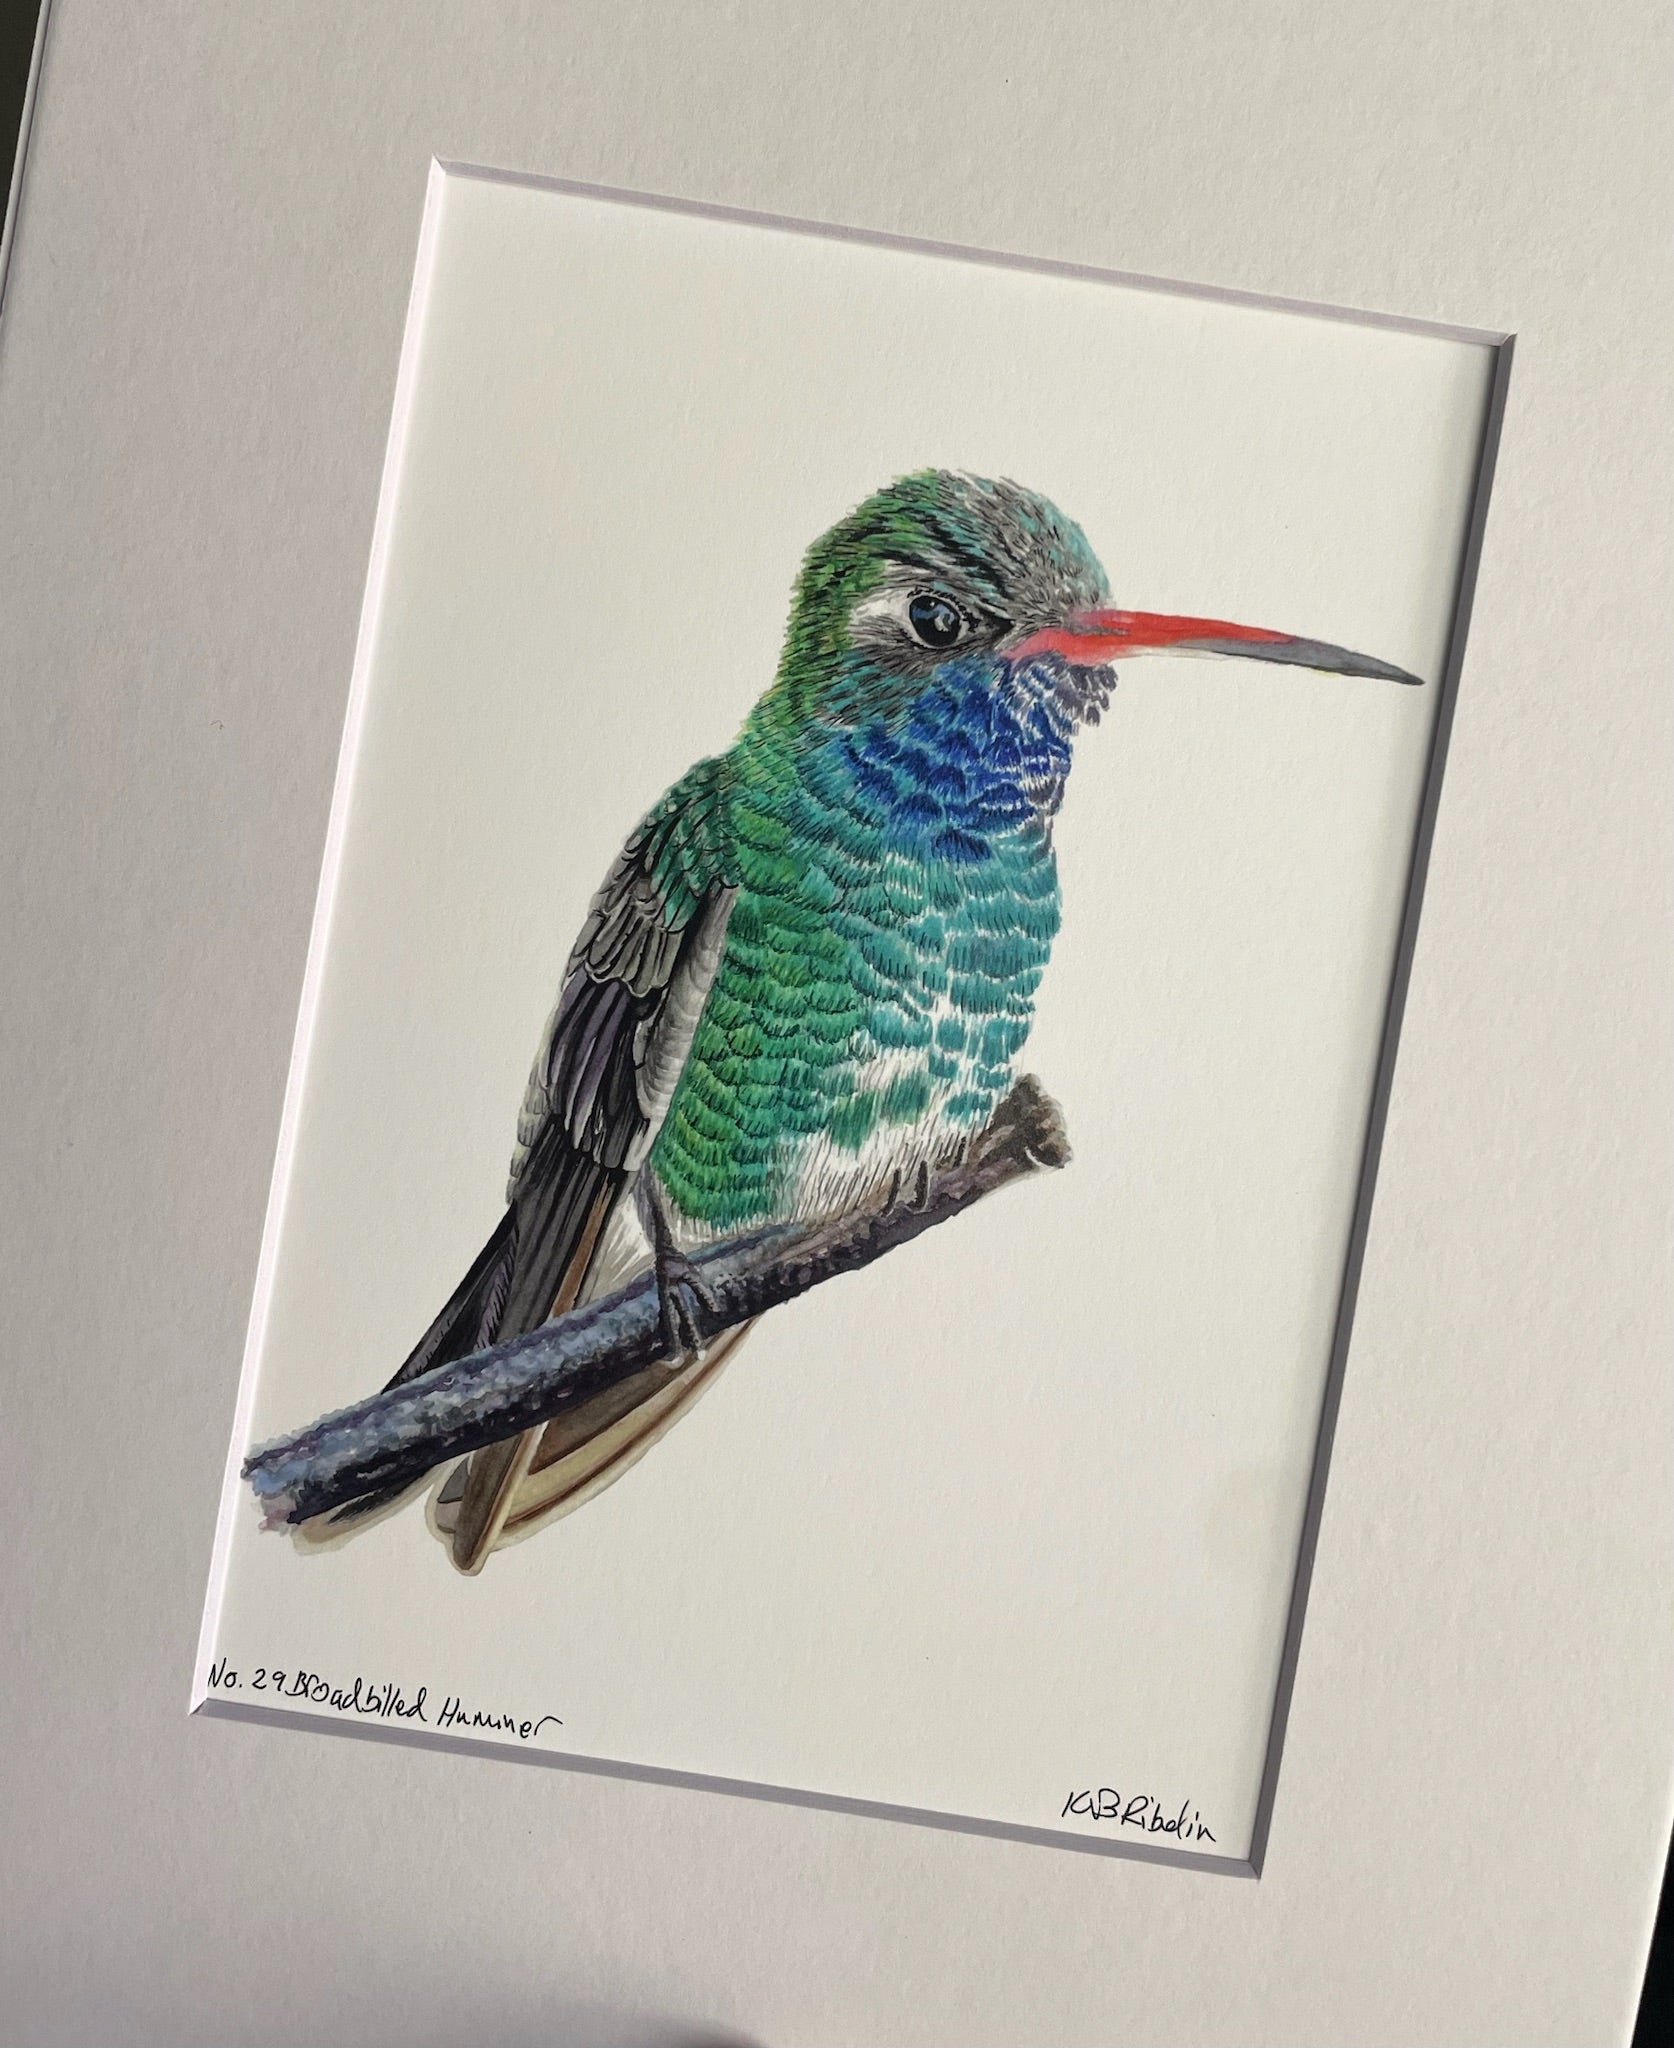 Broad-billed Hummingbird - Bird Art by KB - Giclee Print with White Mat